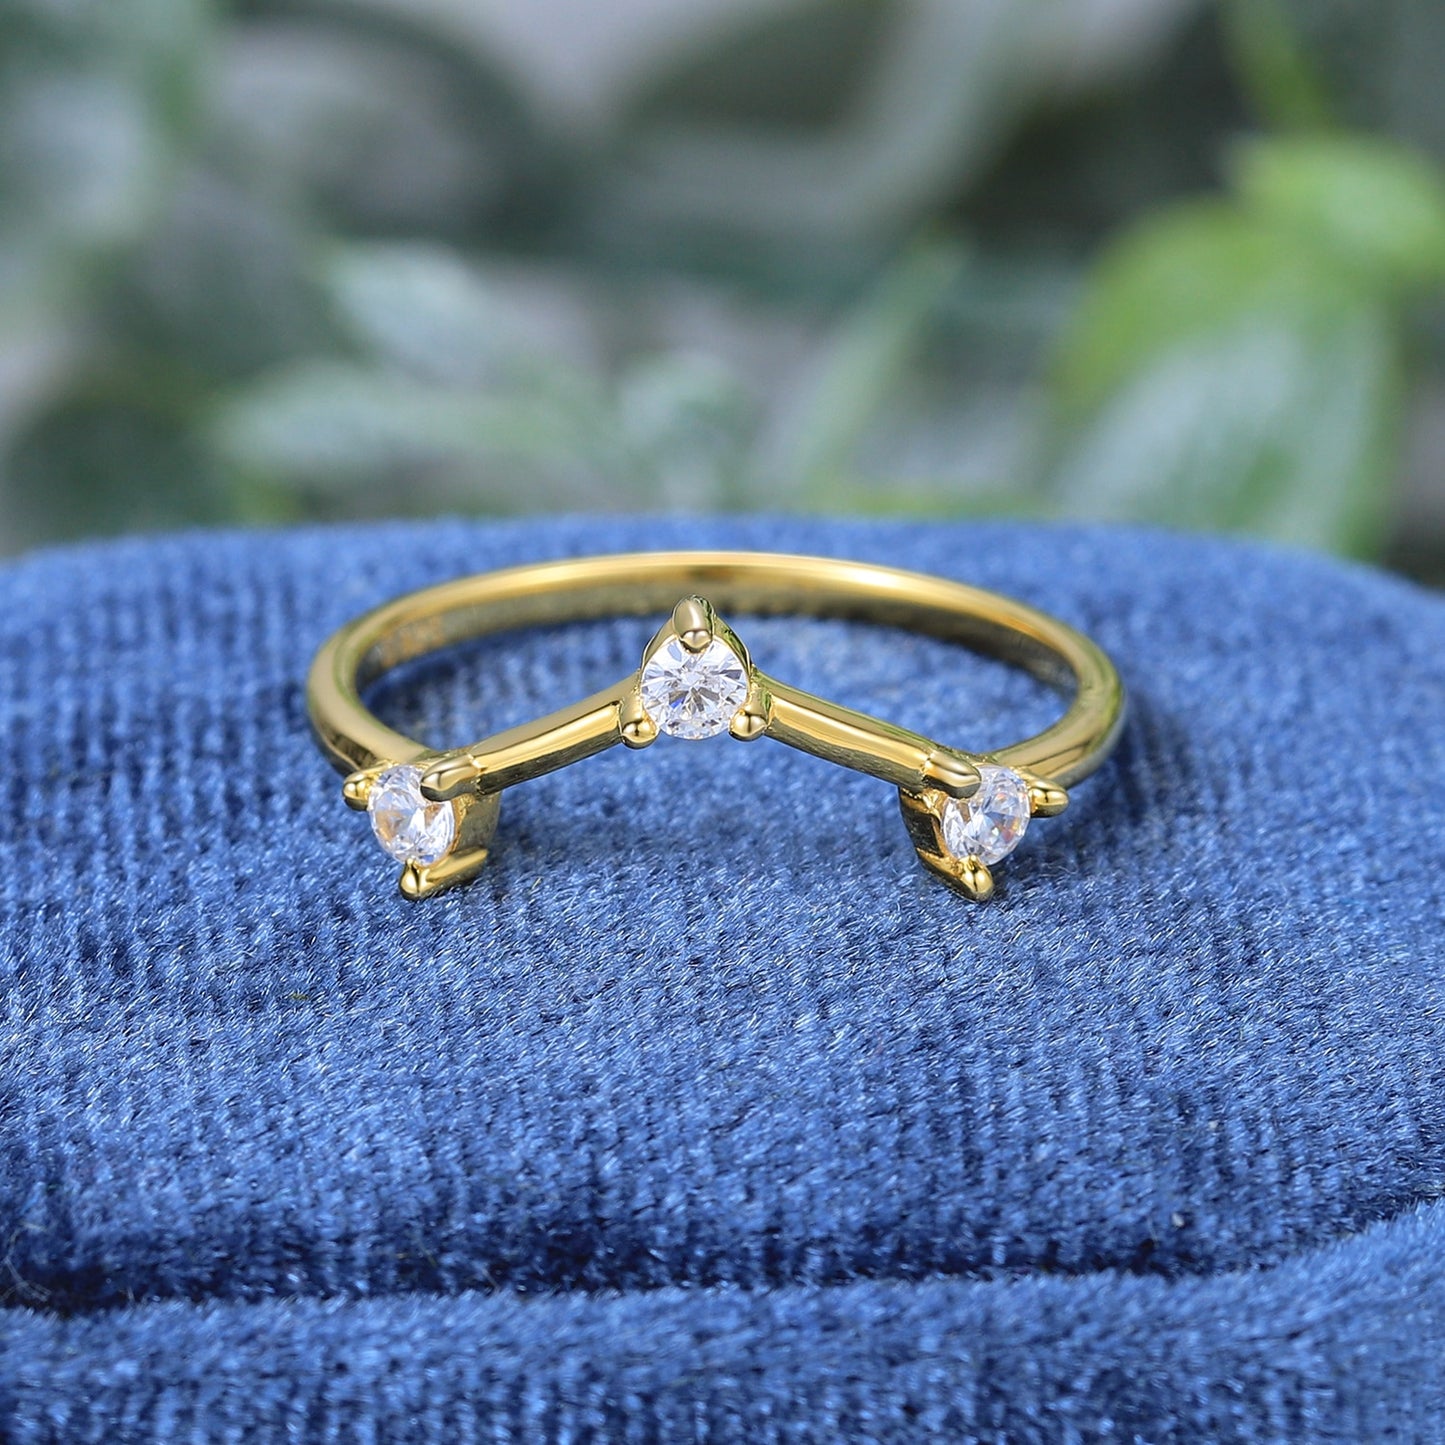 A gold 3 stone chevron style wedding ring.